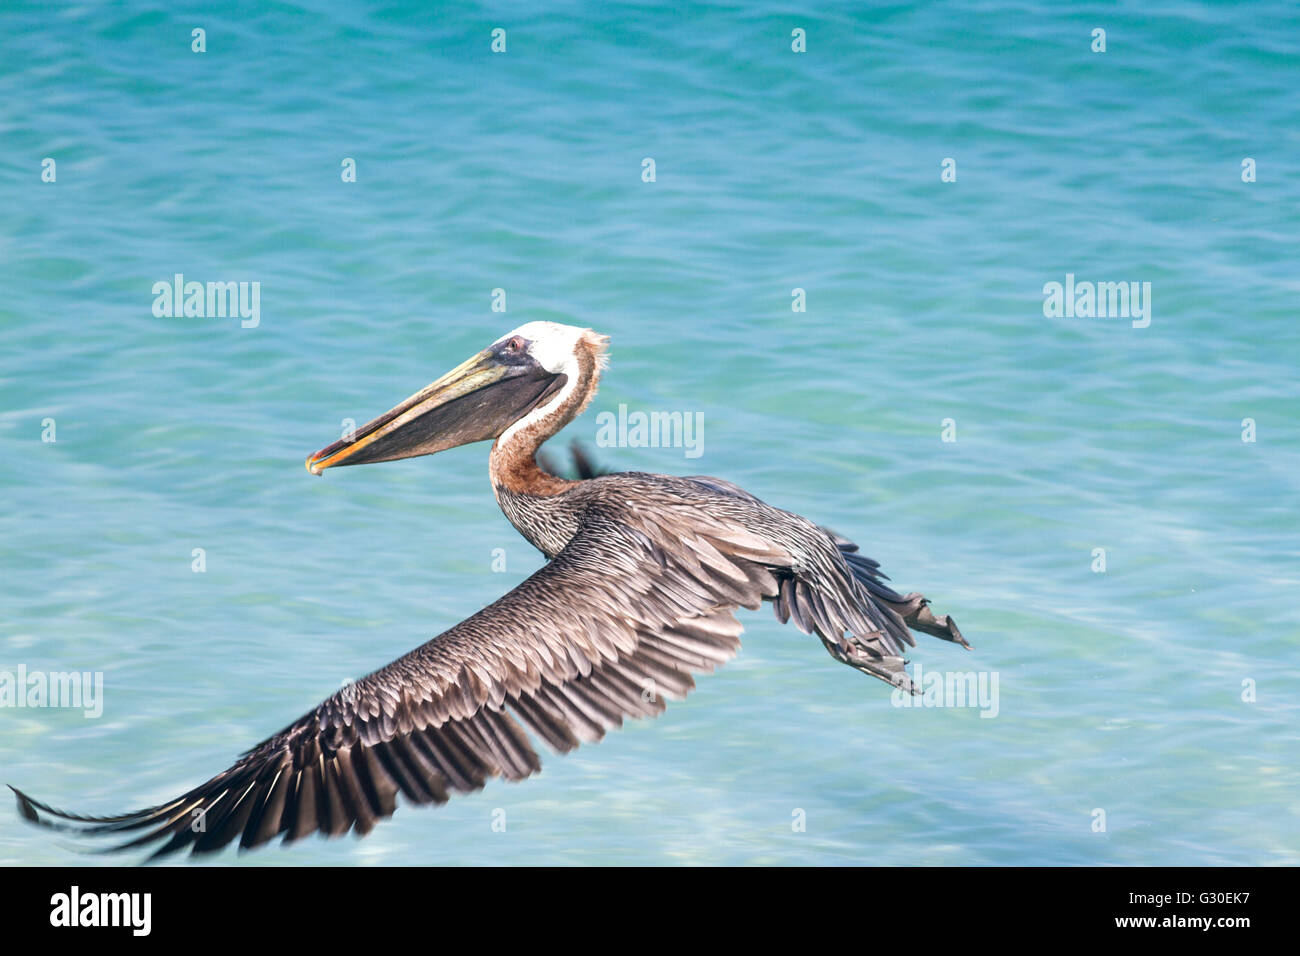 American brown pelican (Pelecanus occidentalis) flying over turquoise water, St. John, USVI Stock Photo